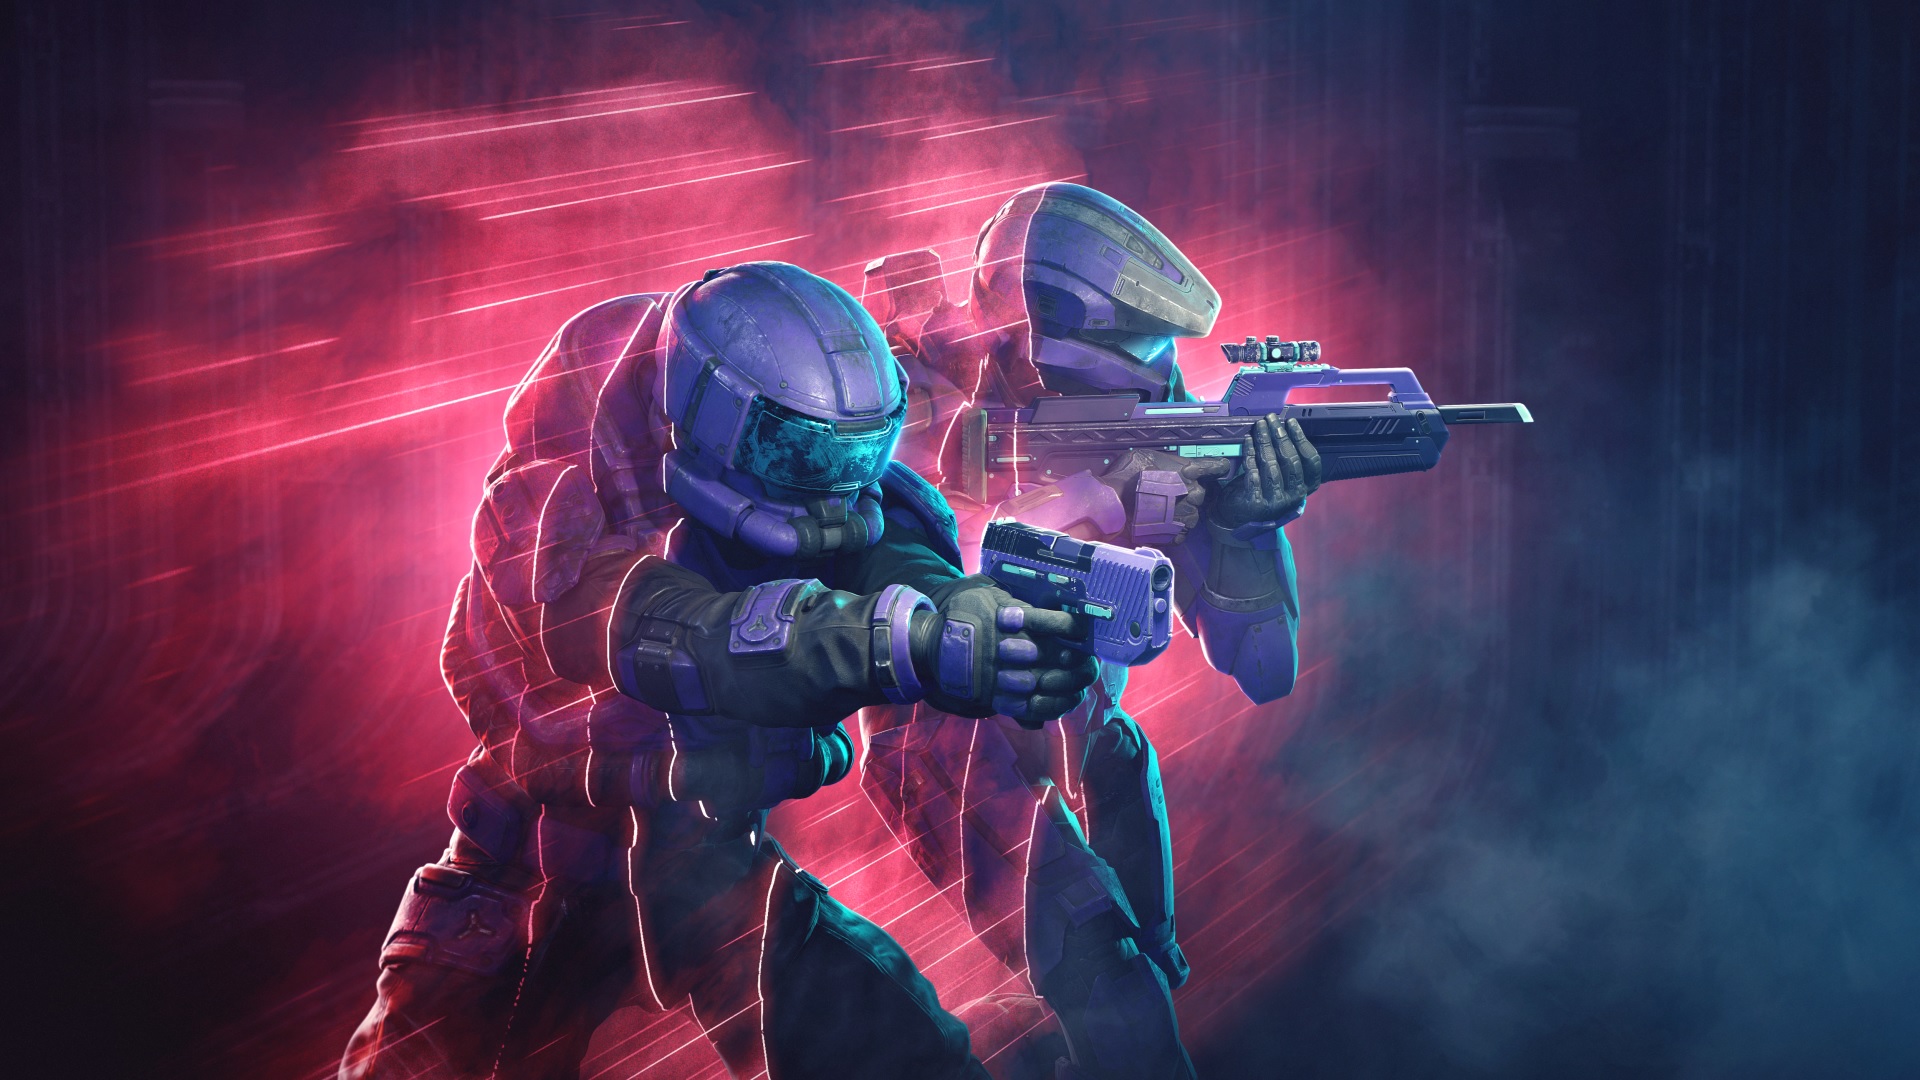 Halo Infinite key art for the Cyber Showdown II event